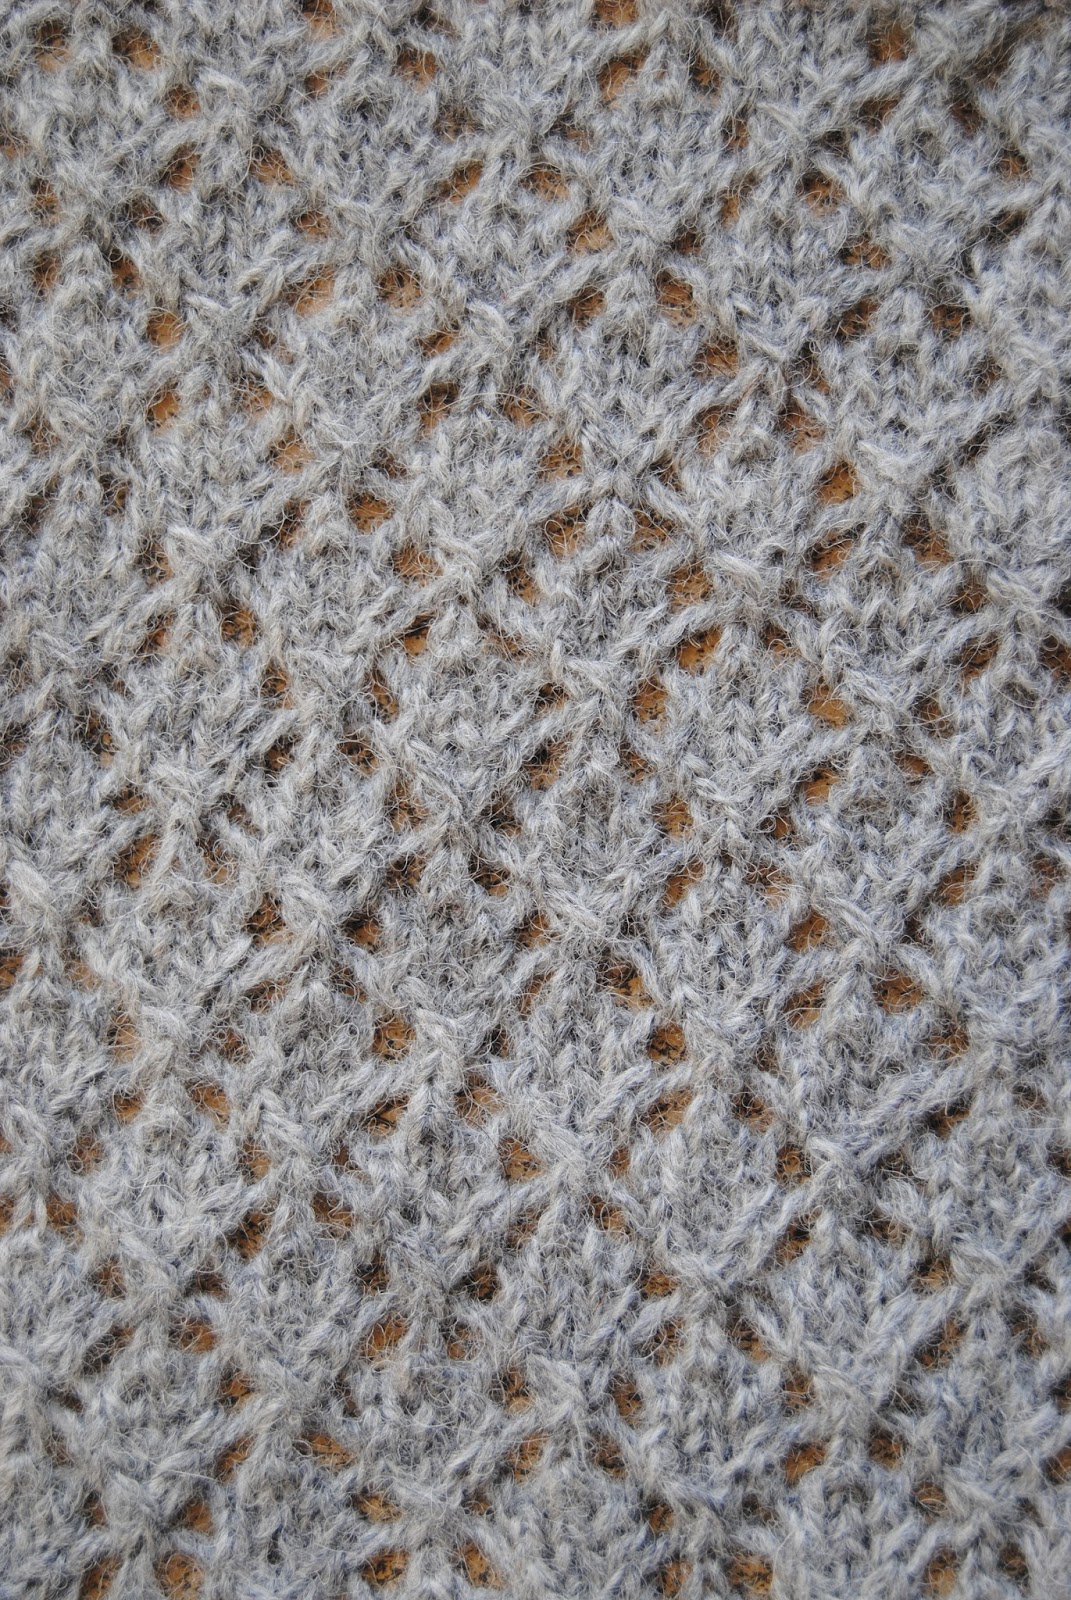 Greasy knittings: